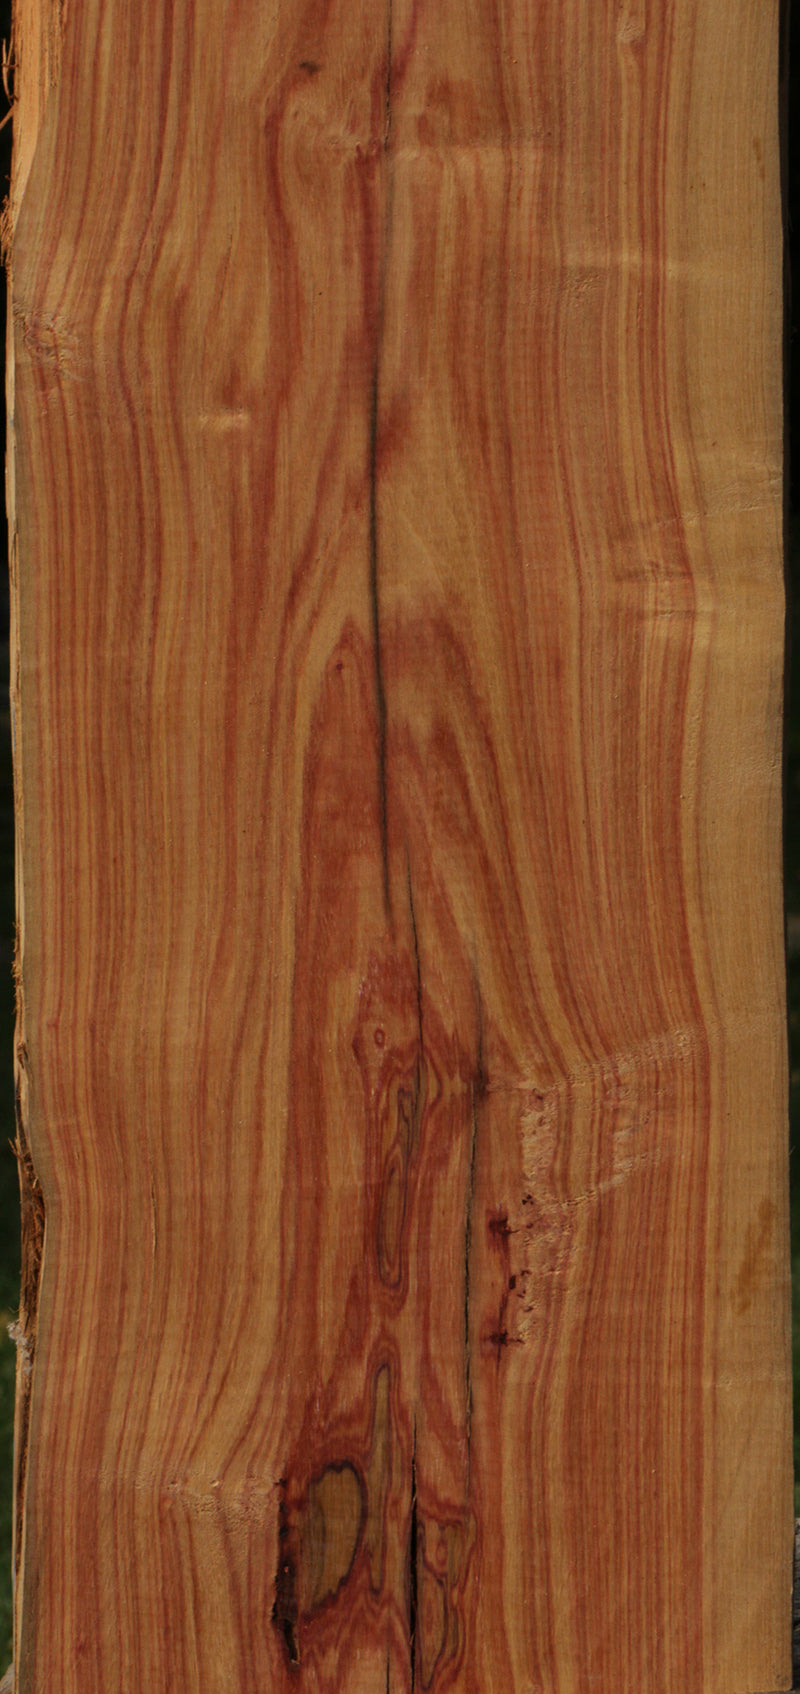 Rustic Live Edge Tulipwood Lumber